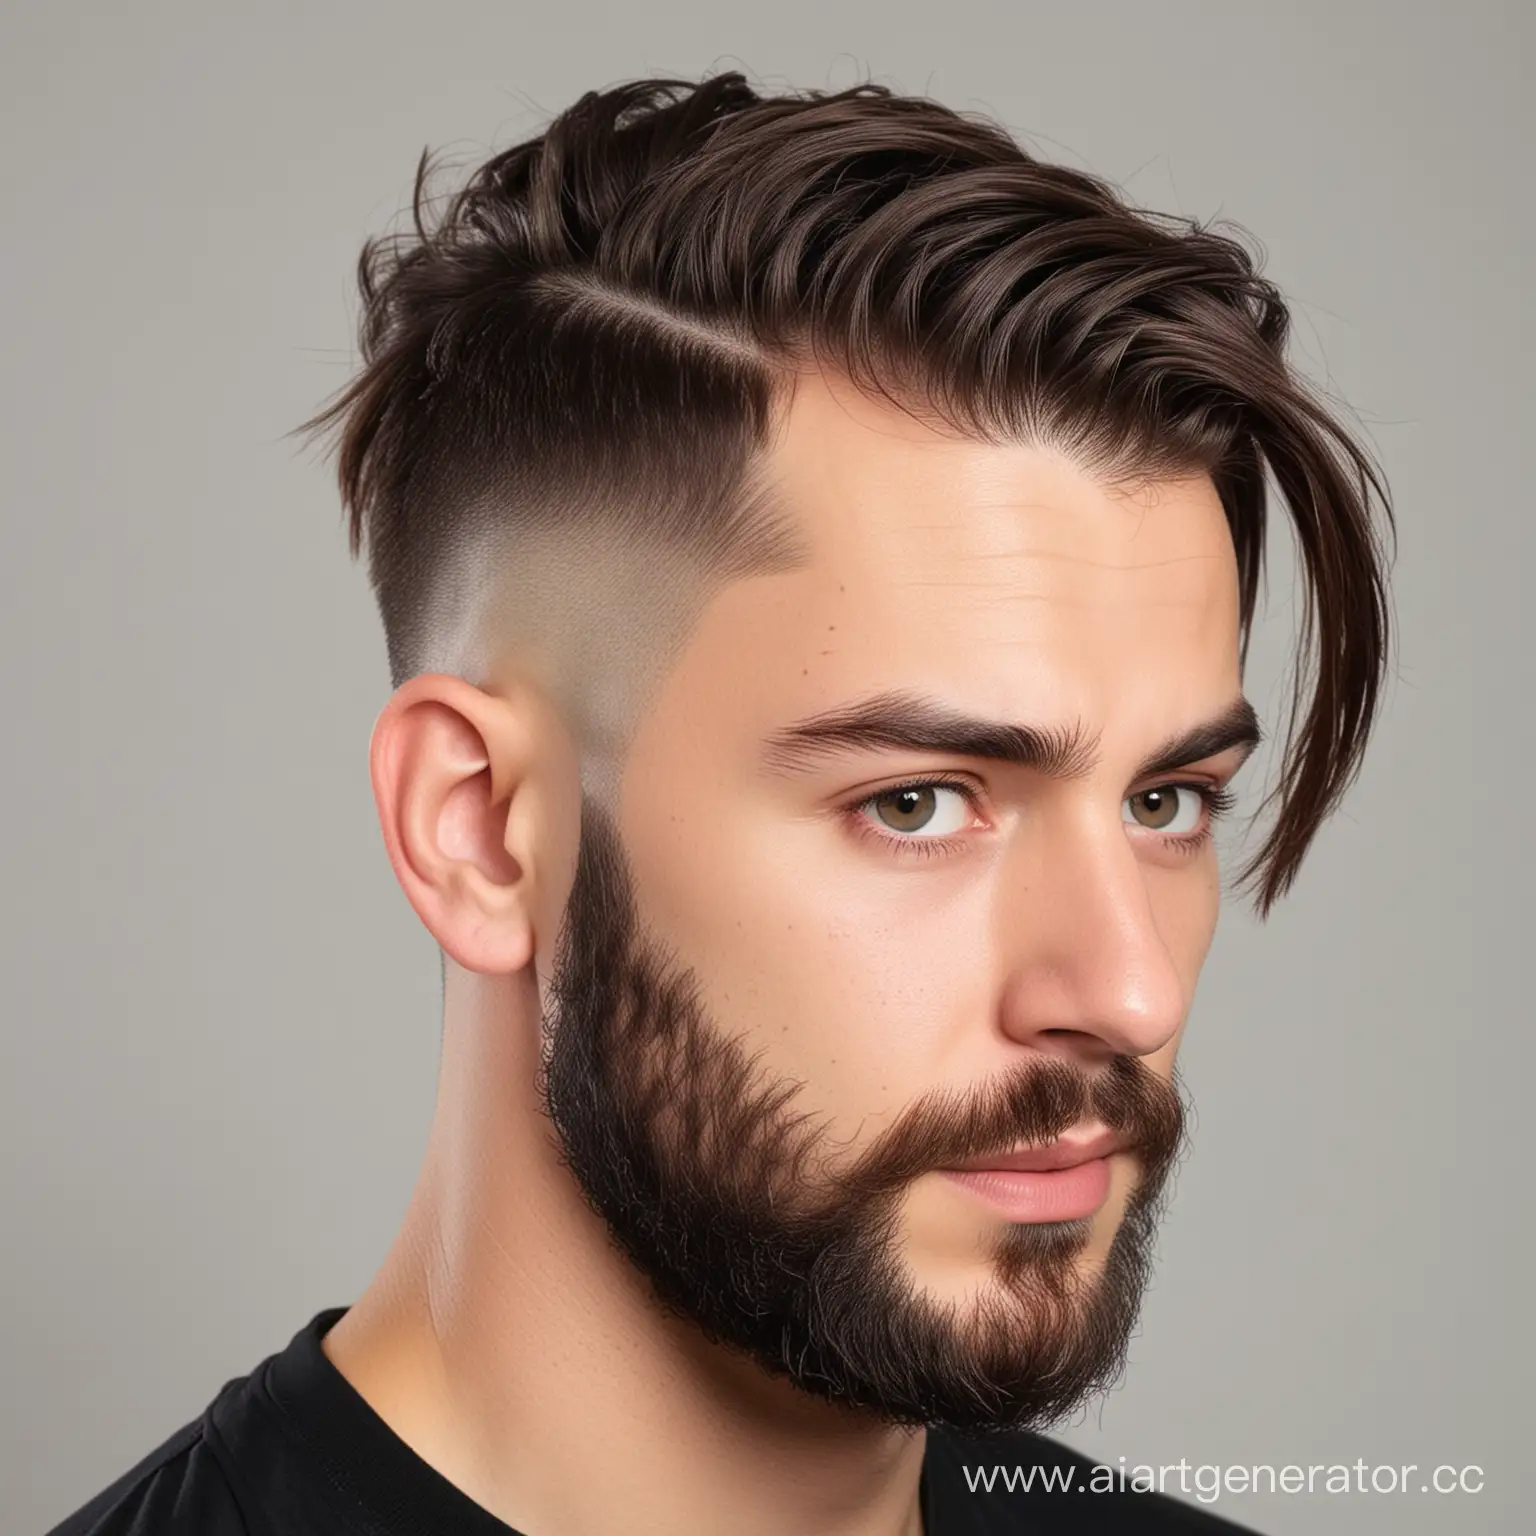 Stylish-Barber-Creates-Edgy-Haircut-for-Trendsetting-Man